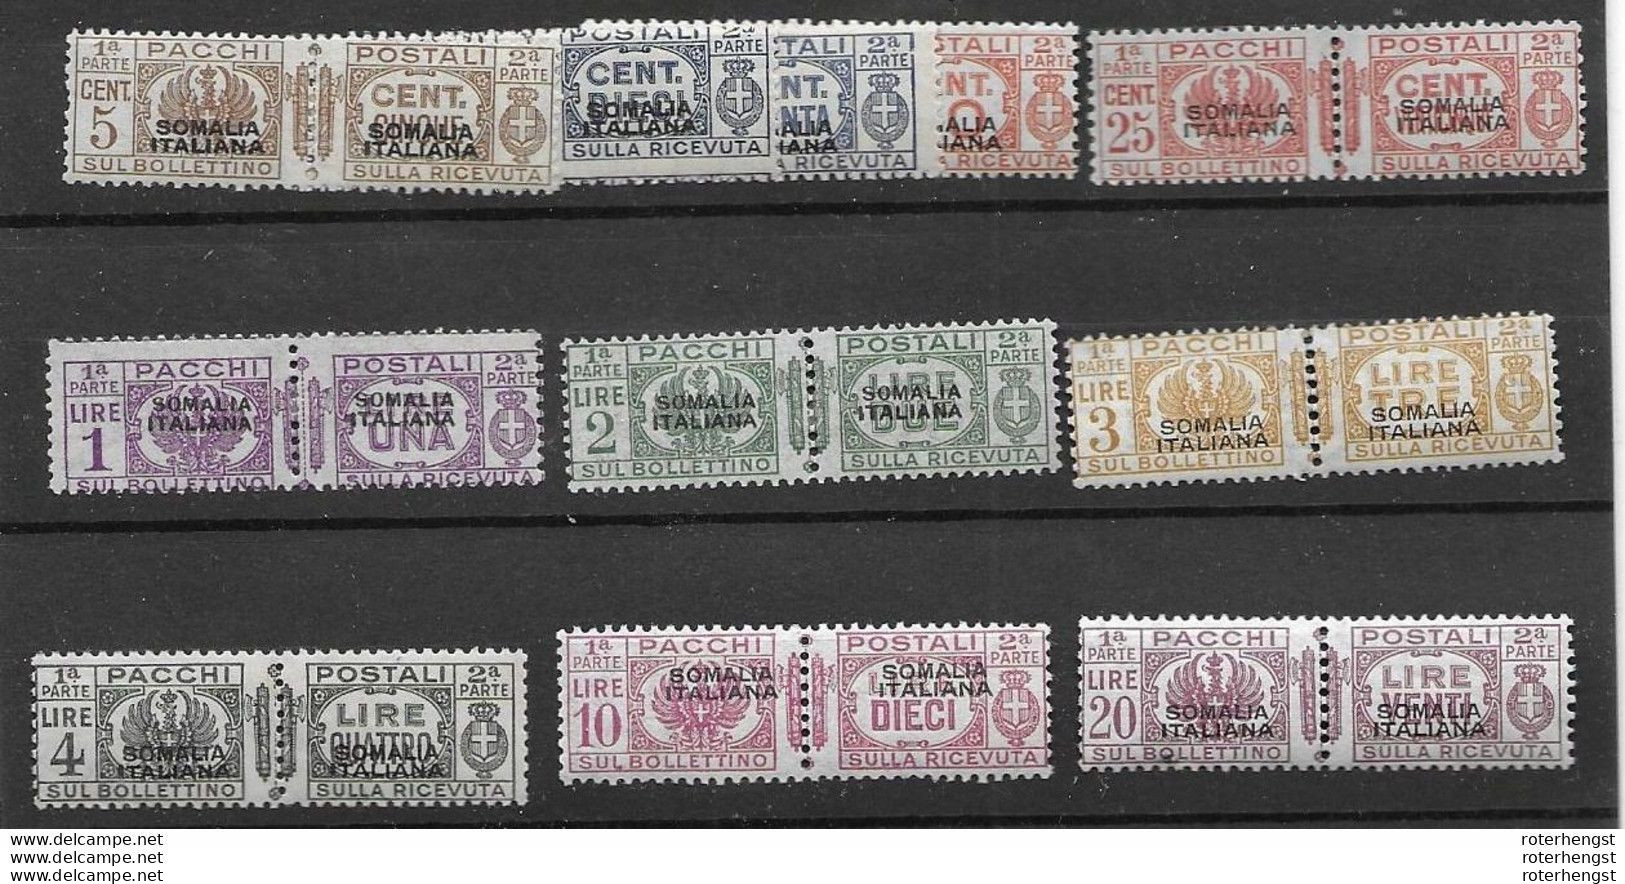 RR Somalia Italiana Mnh** 2090 + Euros 1928 (11 Pairs) - Somalië